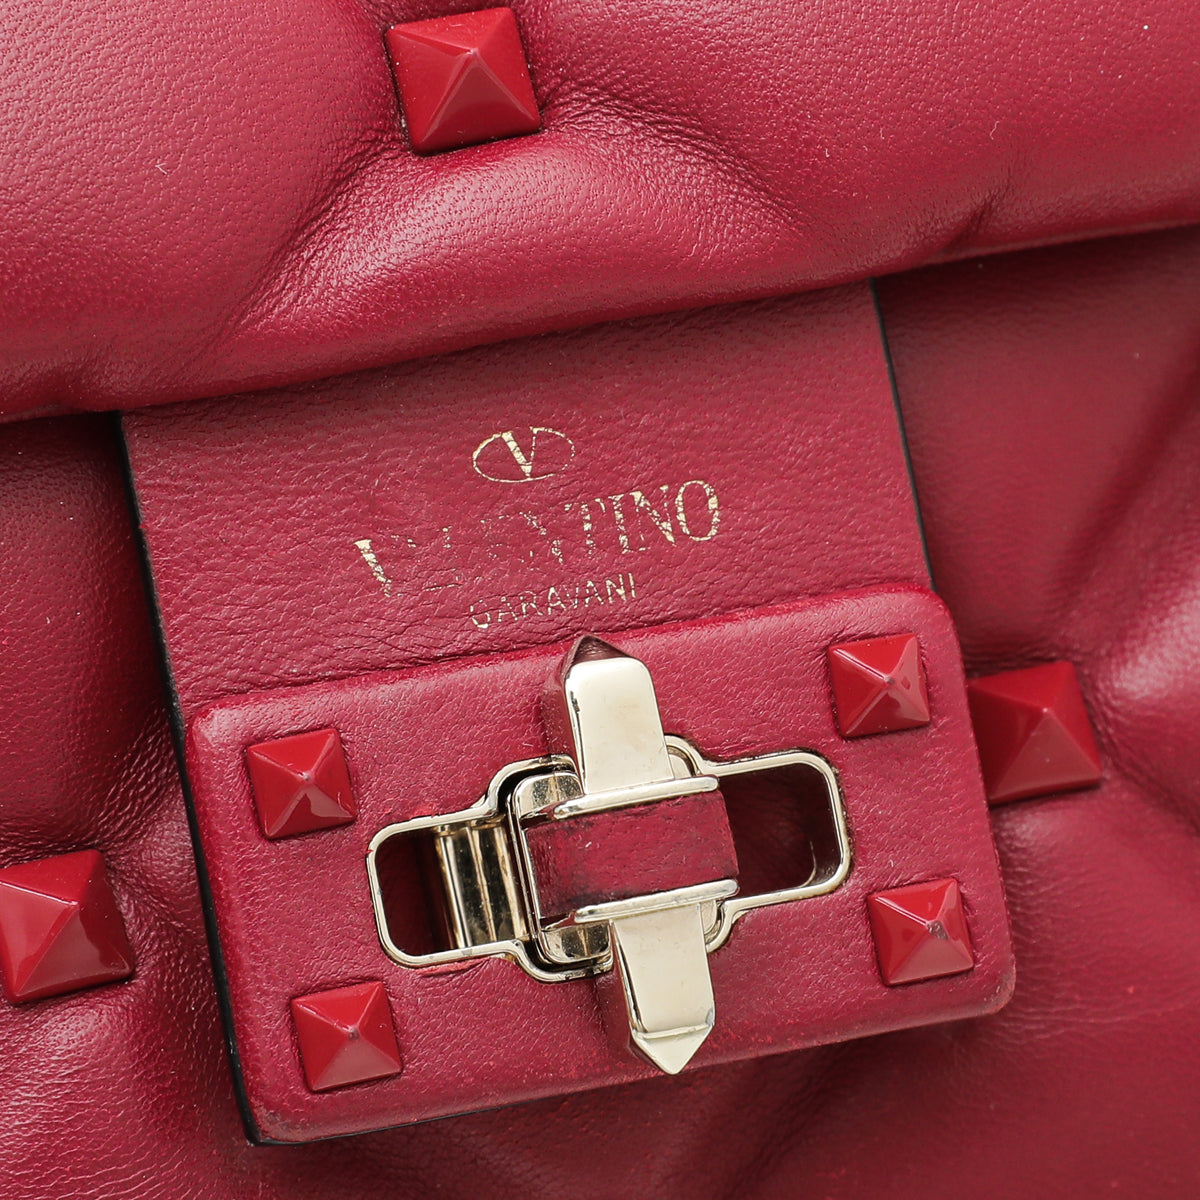 Valentino Red Candystud Top Handle Medium Bag